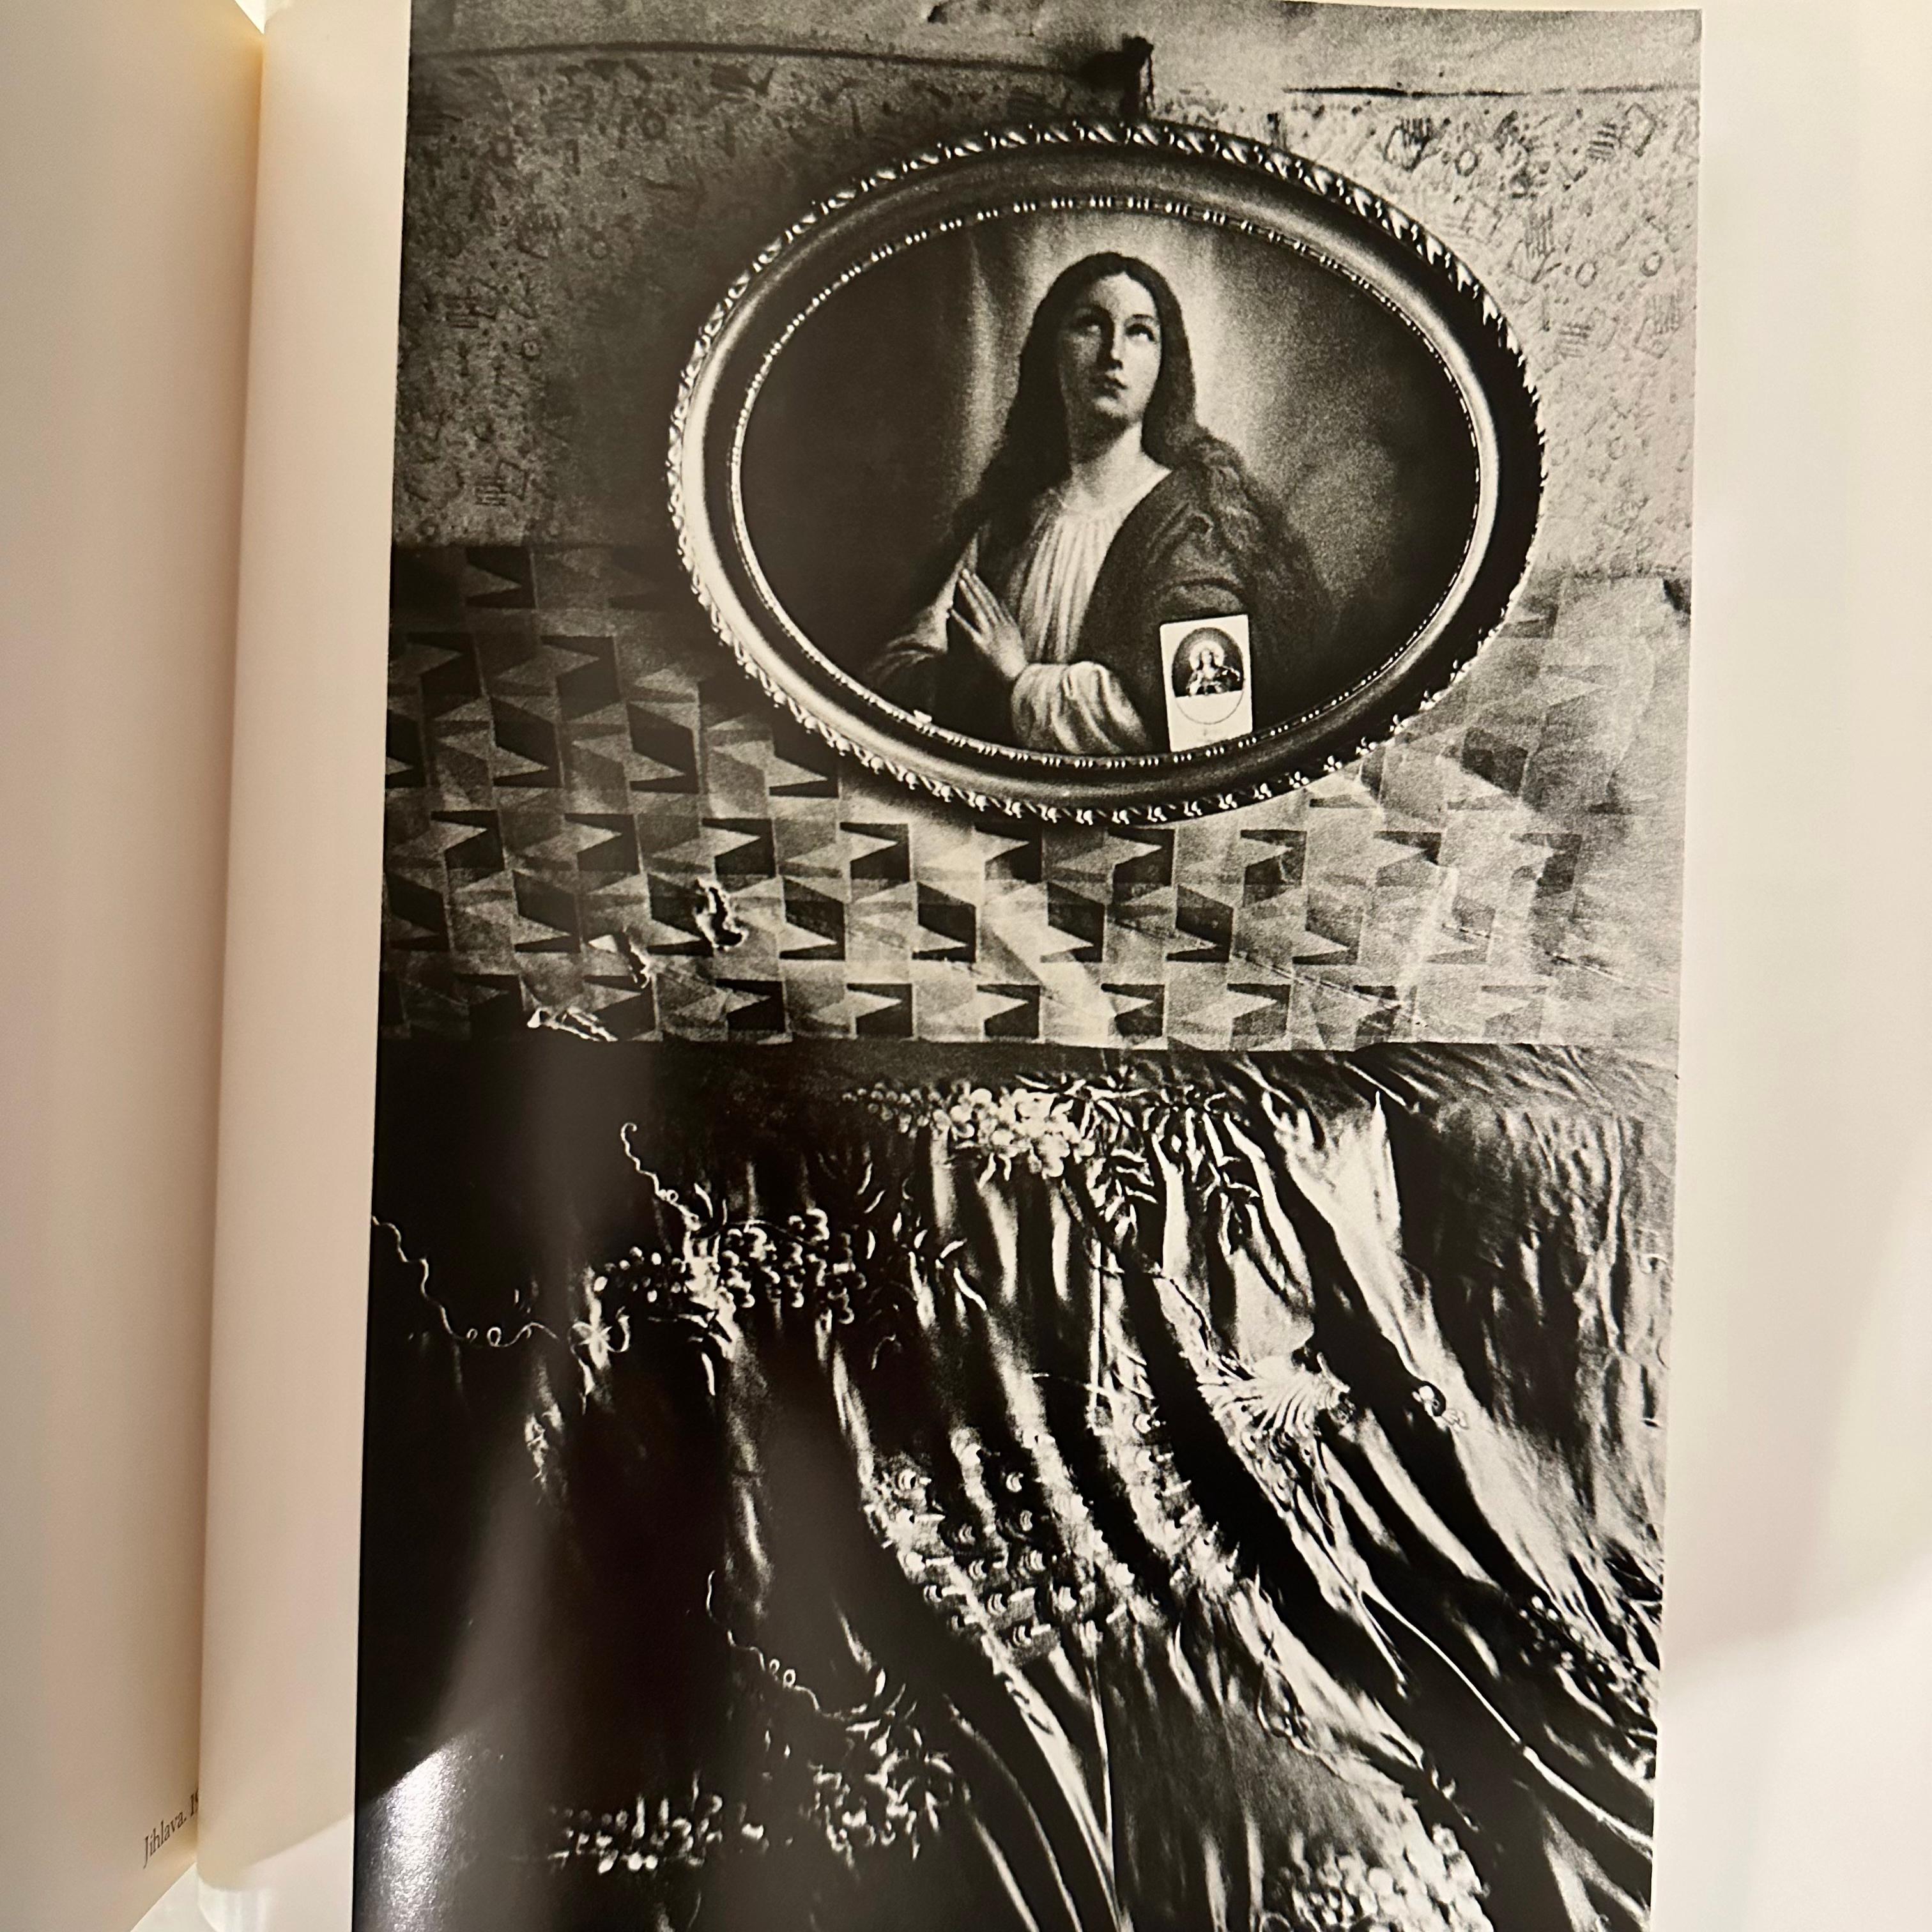 GYPSIES - Josef Koudelka - 1st U.S. edition, New York, 1975 4